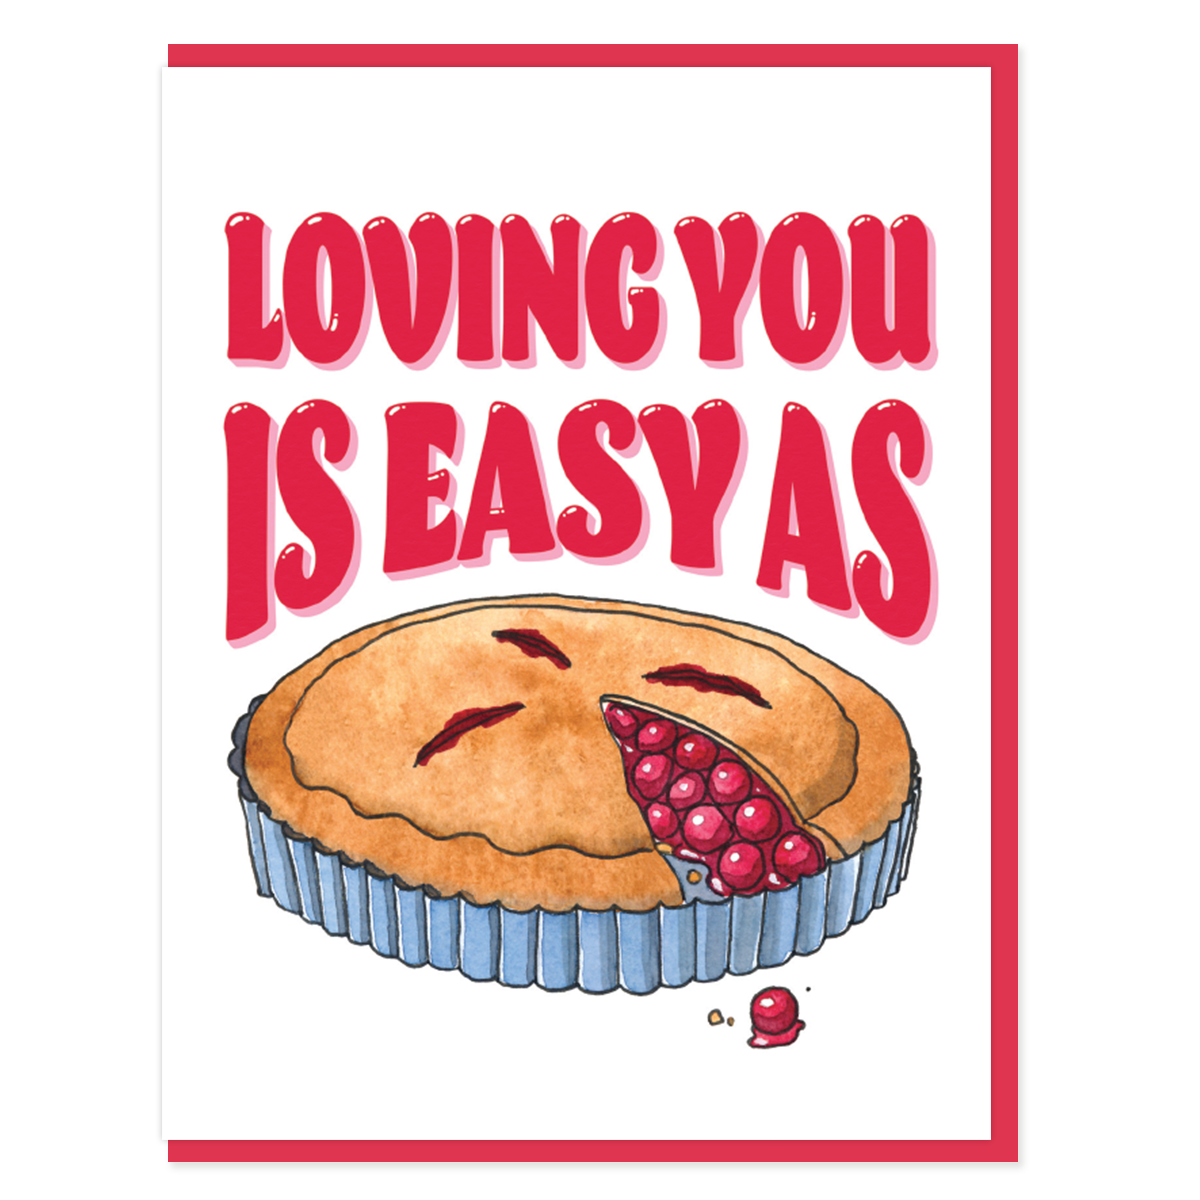 Easy as Pie Card